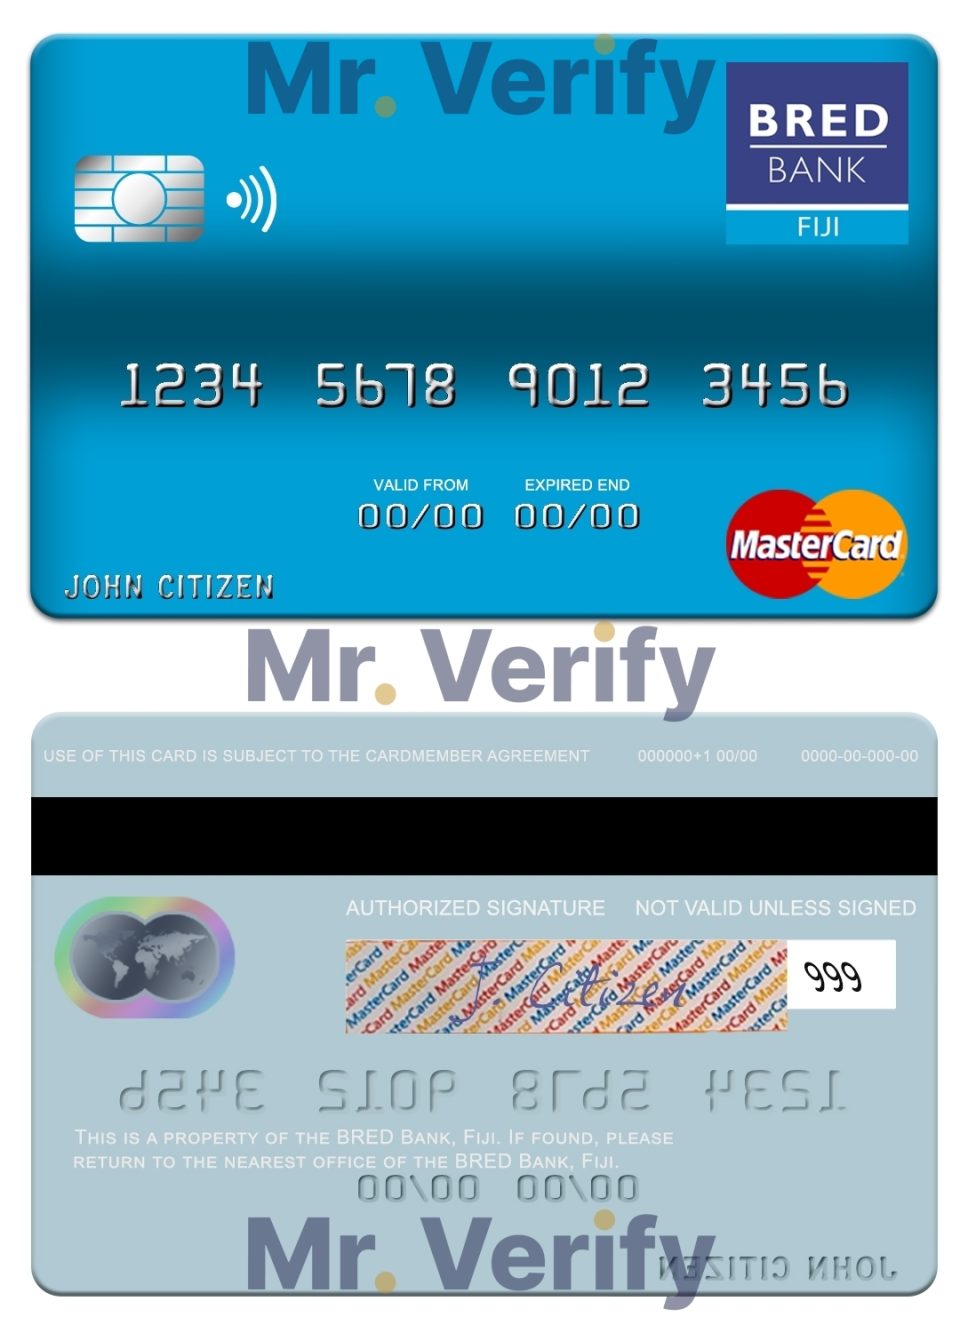 Fillable Fiji BRED Bank mastercard credit card Templates | Layer-Based PSD